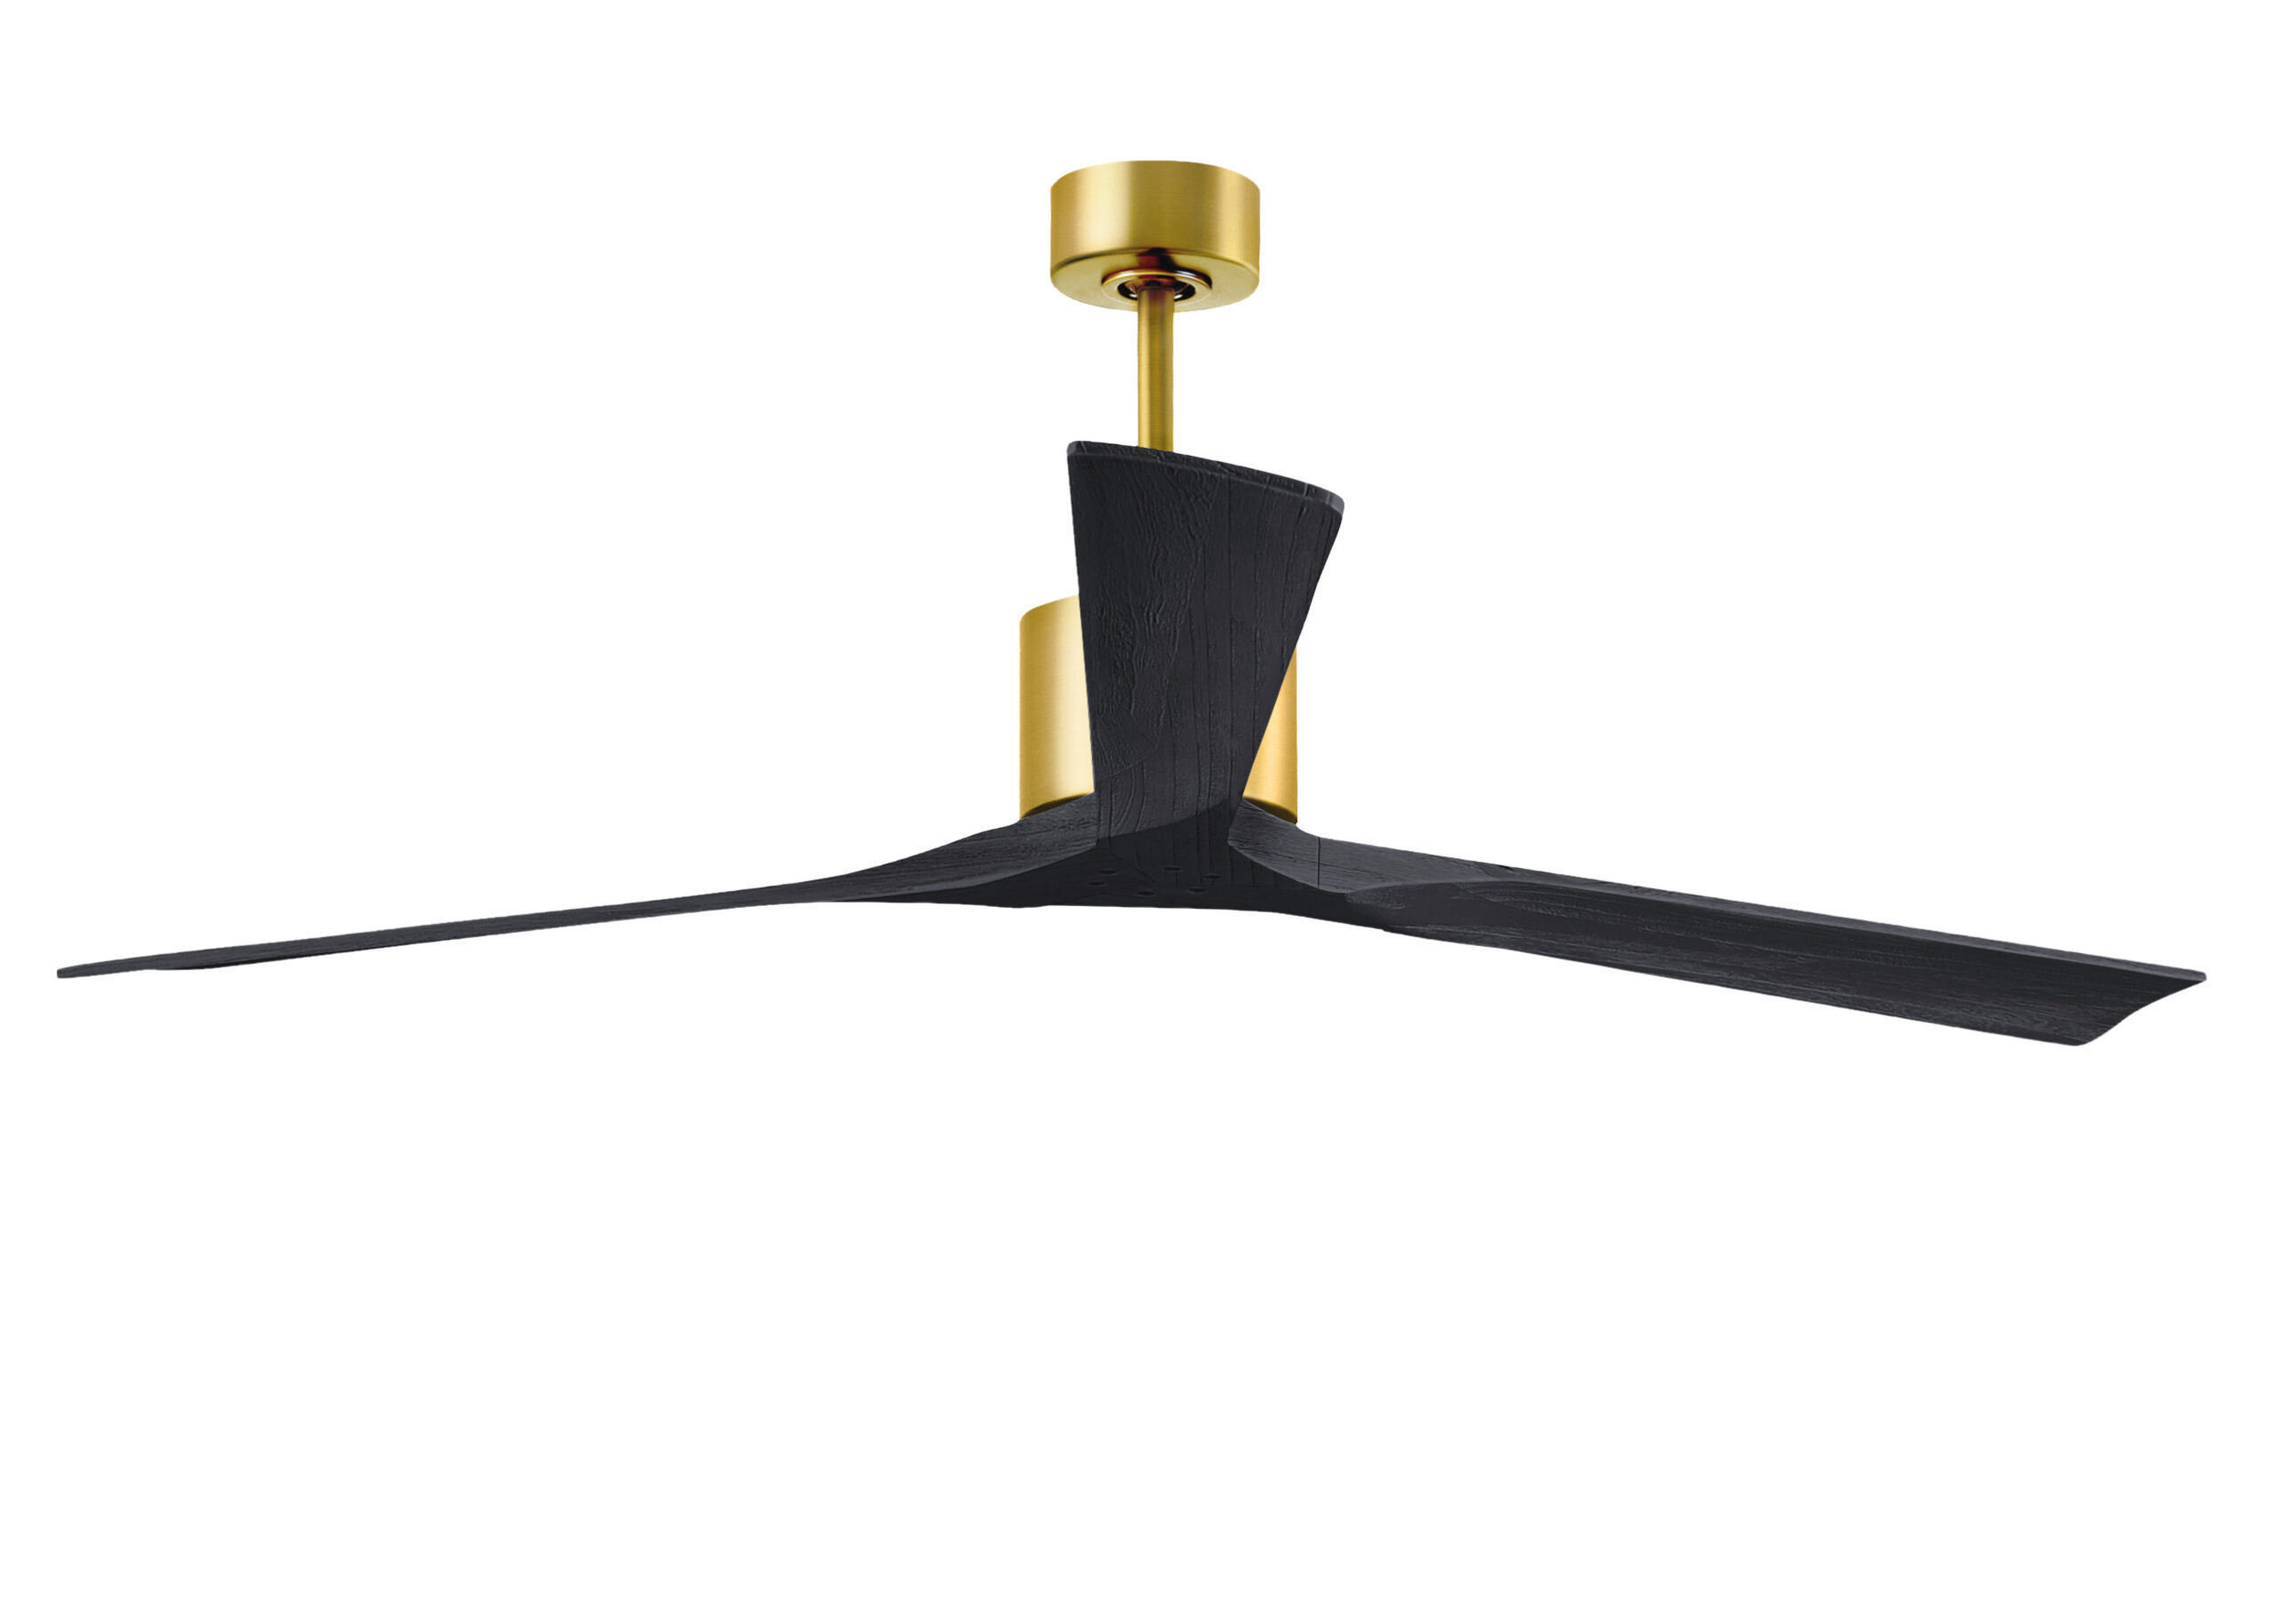 Nan XL Ceiling Fan in Brushed Brass with 72” Matte Black Blades